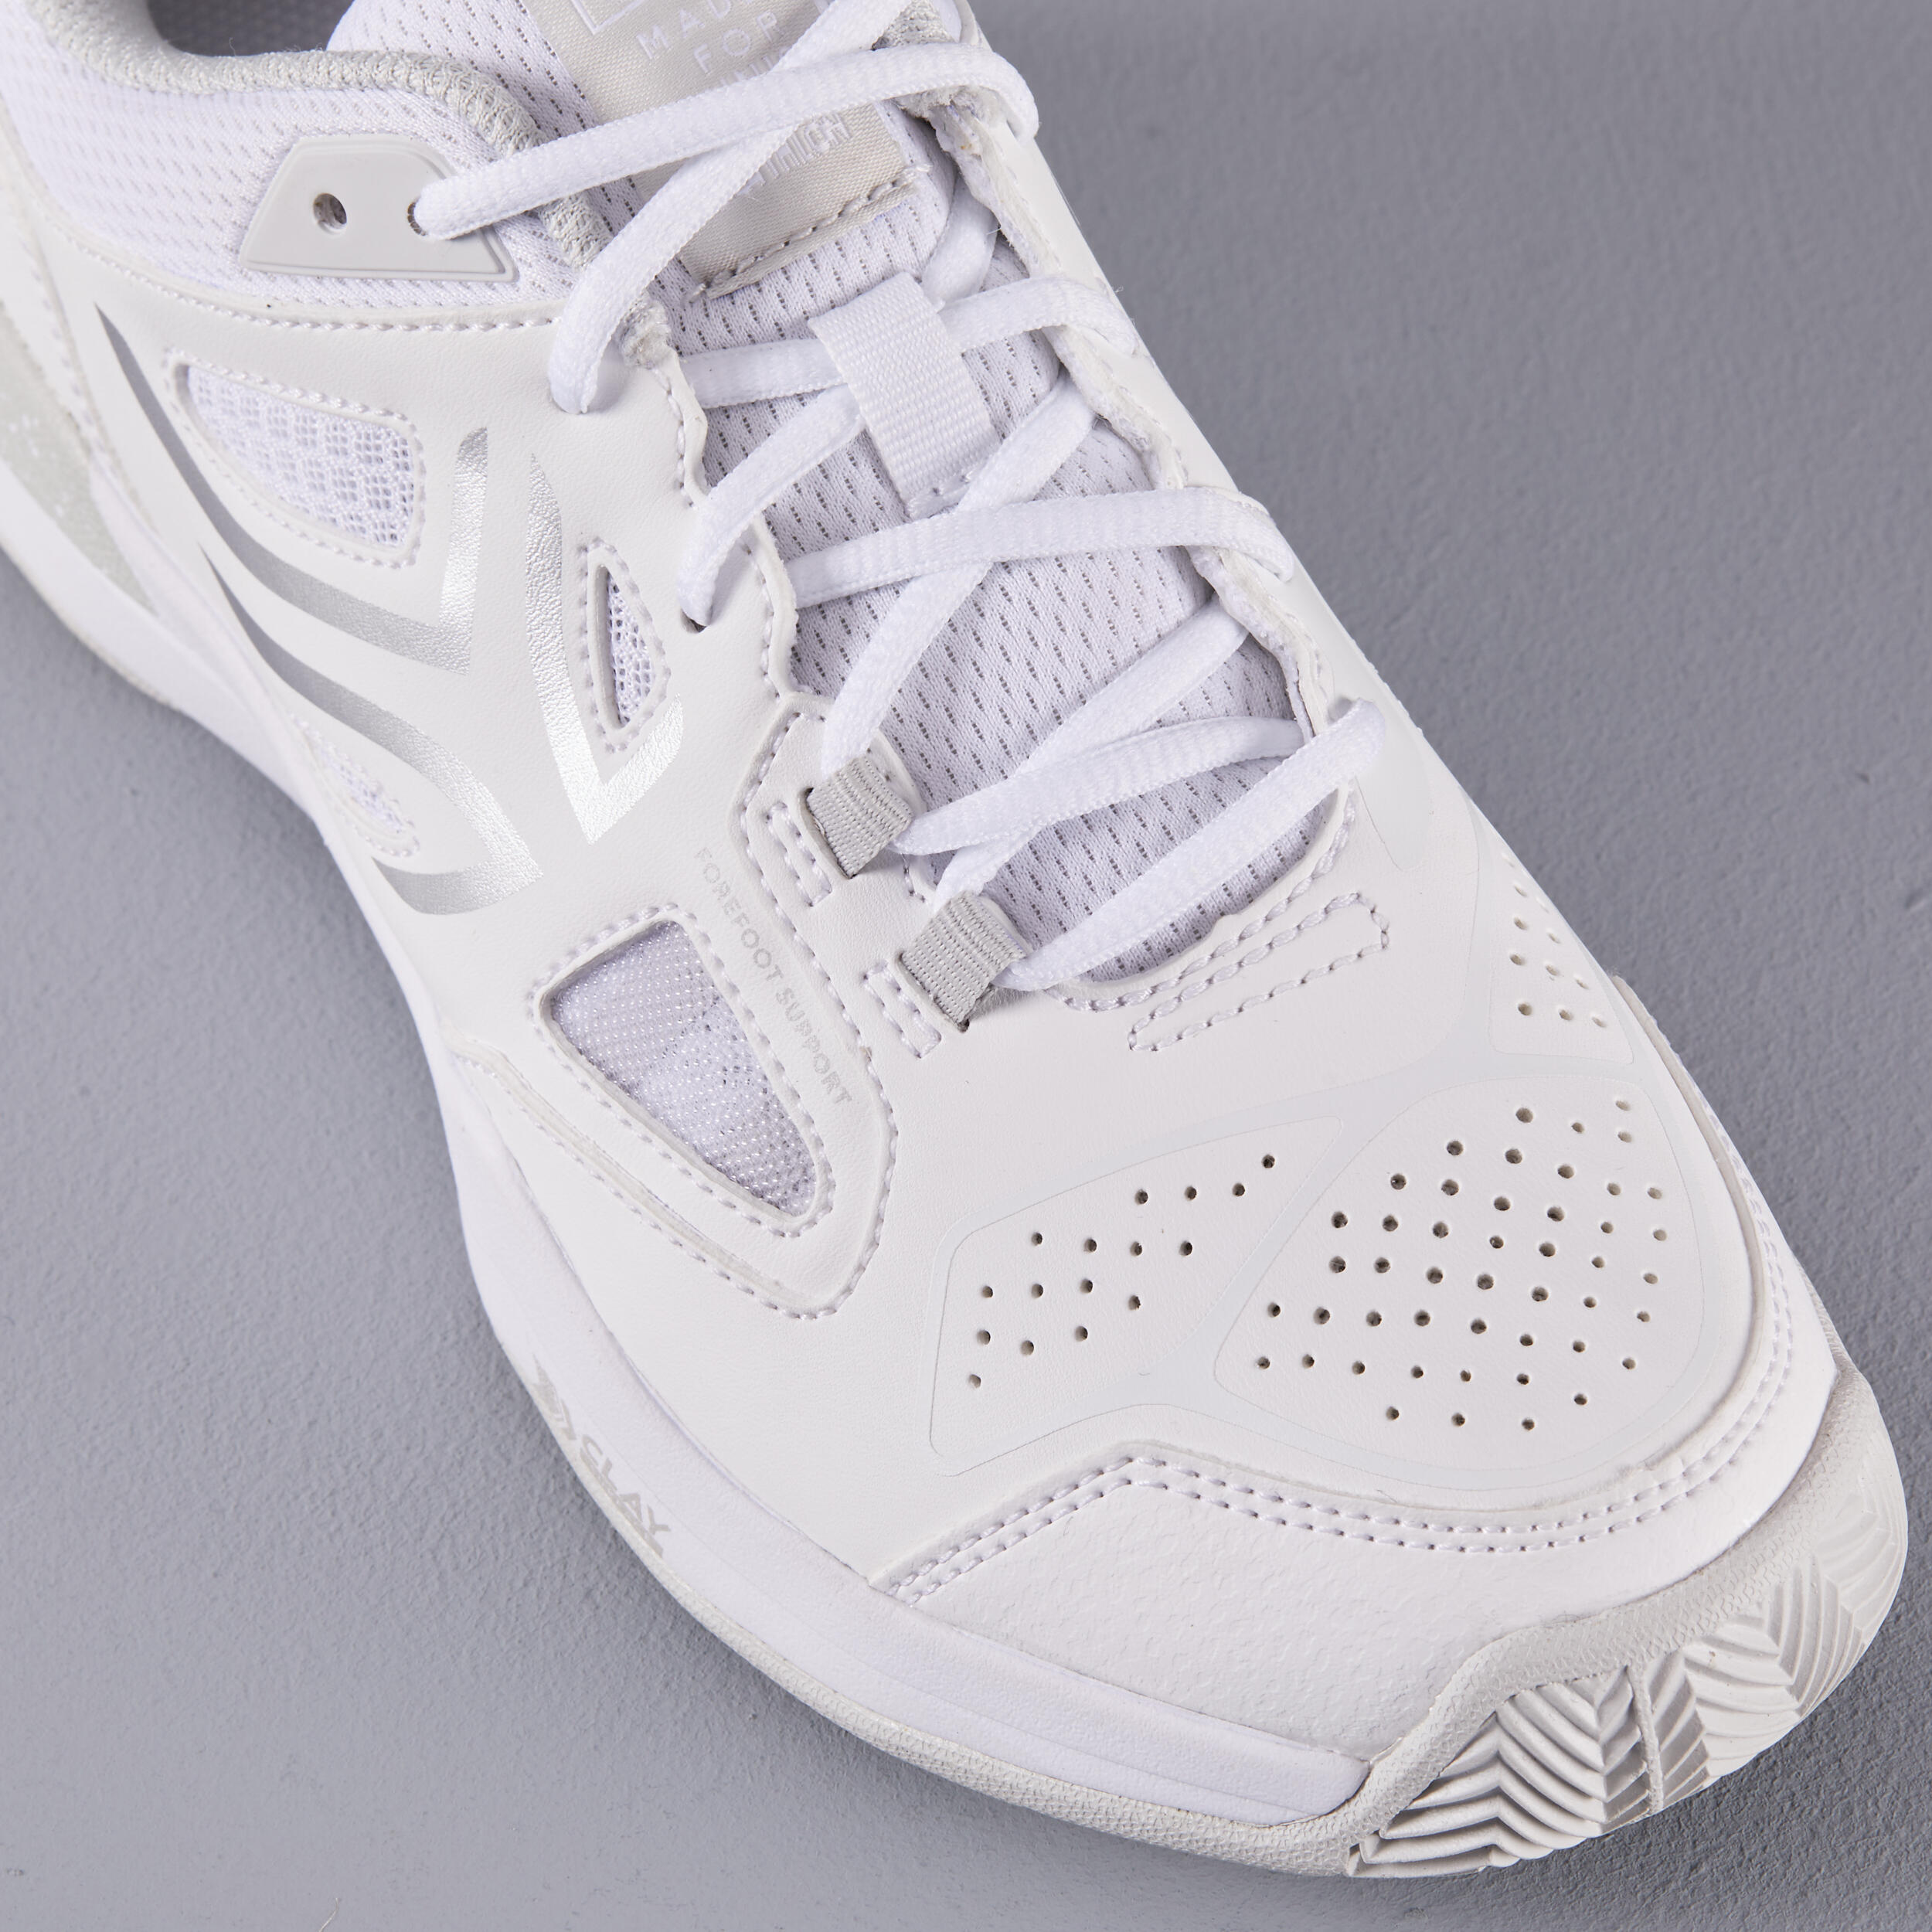 Women's Clay Court Tennis Shoes TS500 - White 6/6